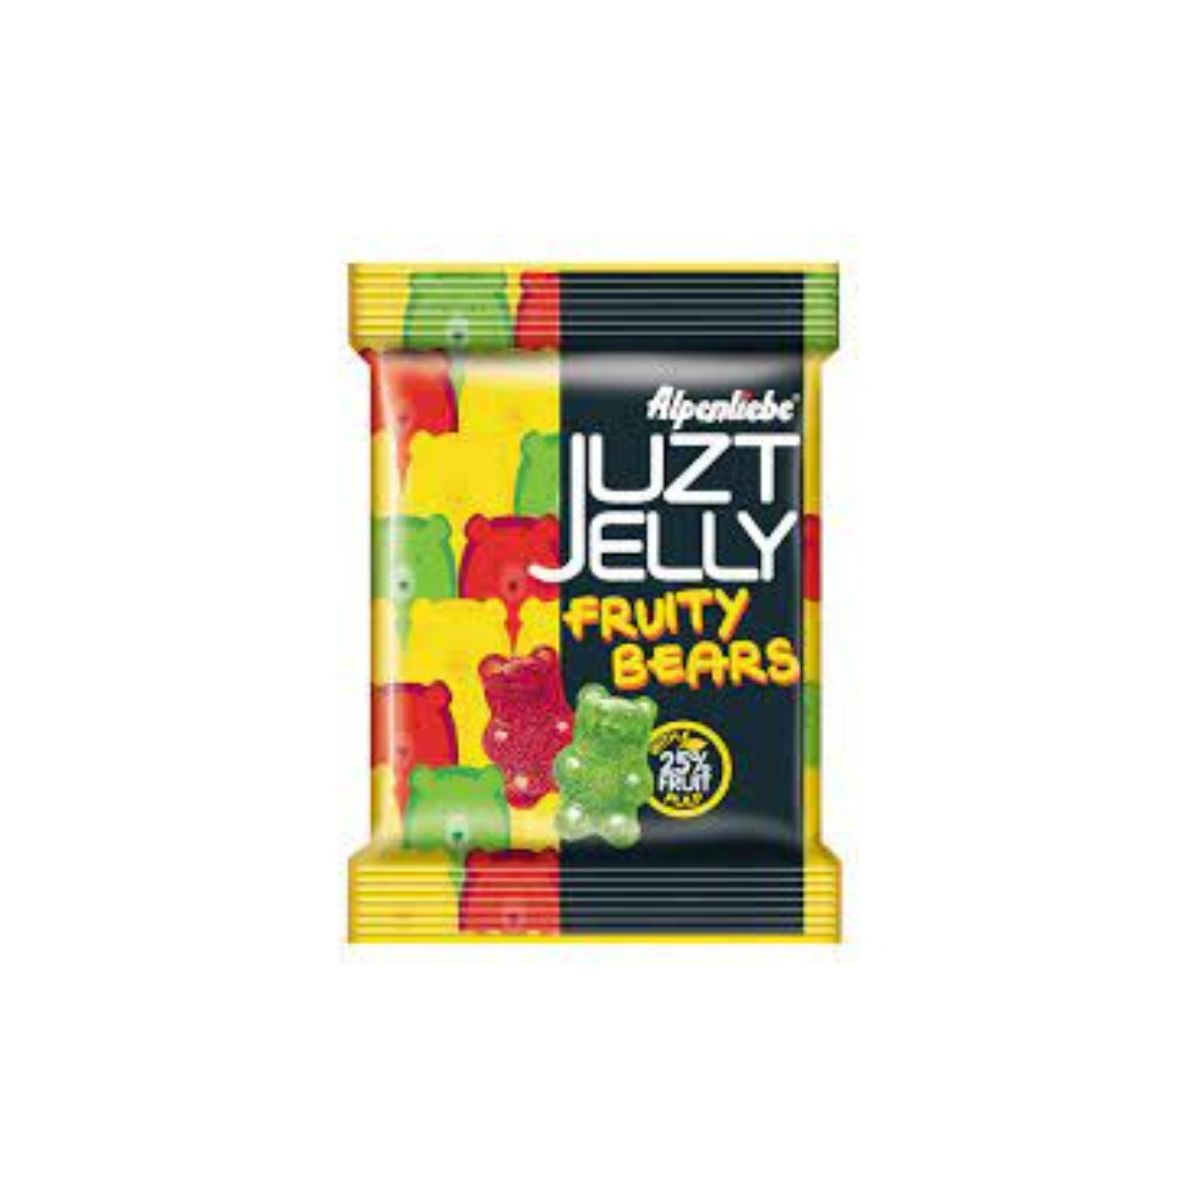 Alpenliebe Juzt Jelly Fruity Bears - Immunity Boosting Vitamin C - 22.5g